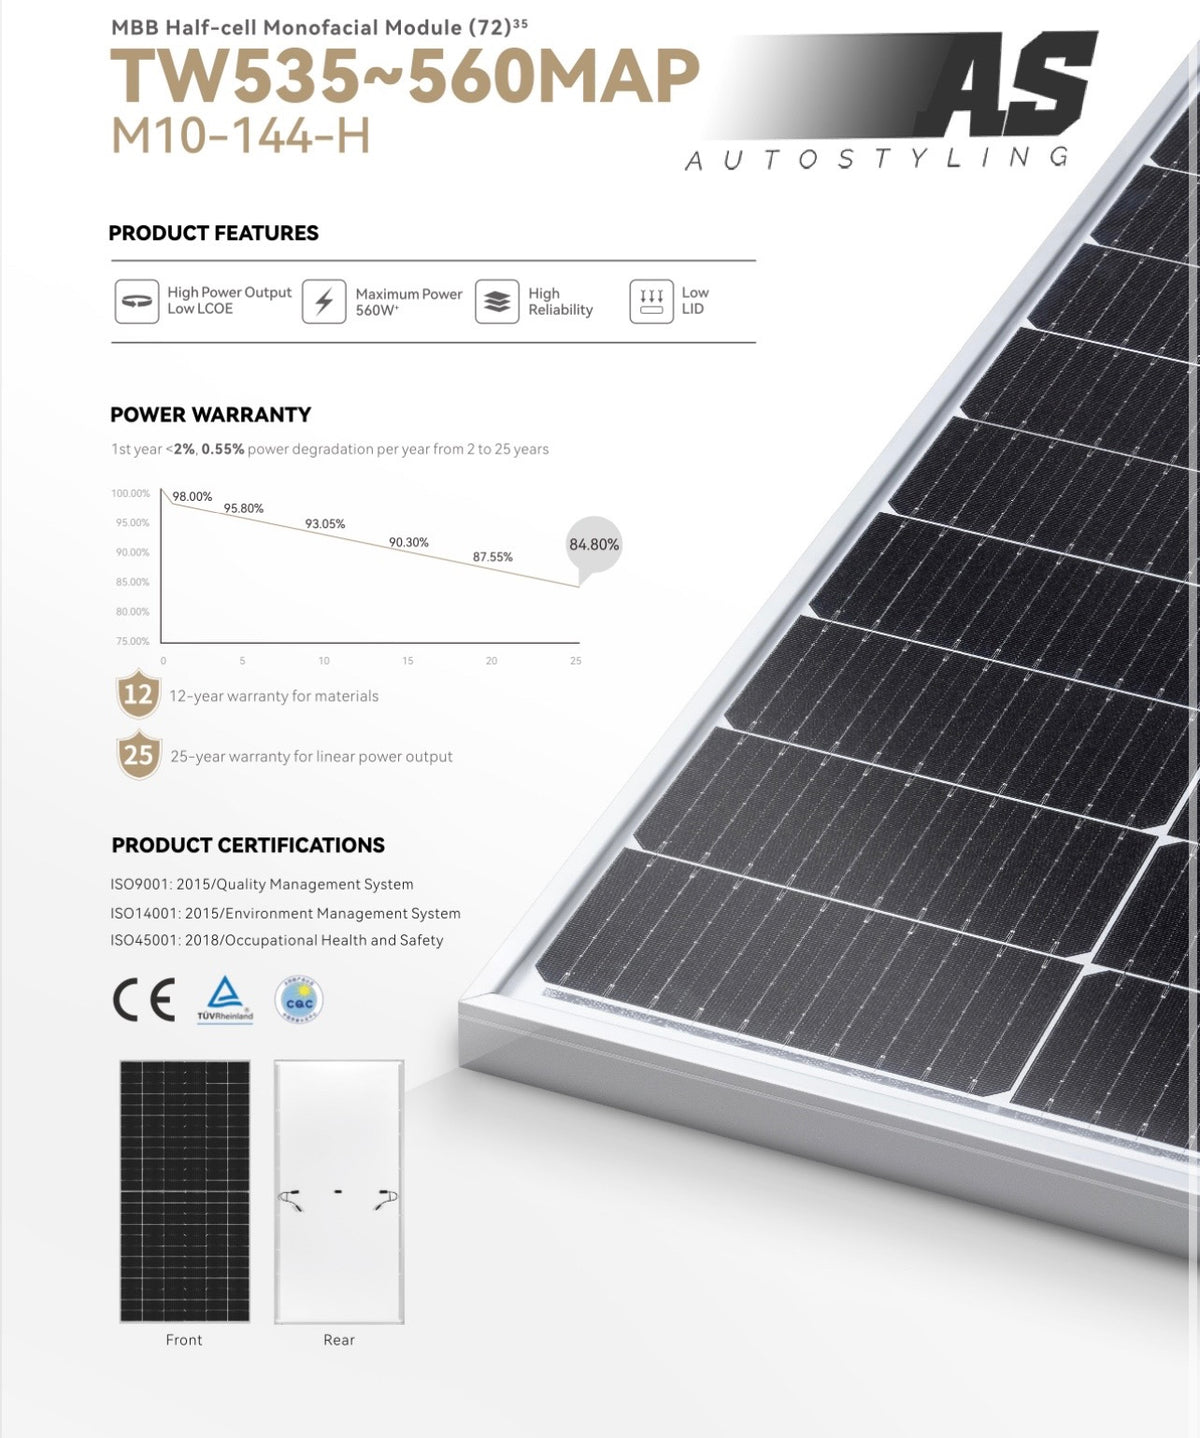 TW Solar - Solar Power Panels 550w Monocrystalline